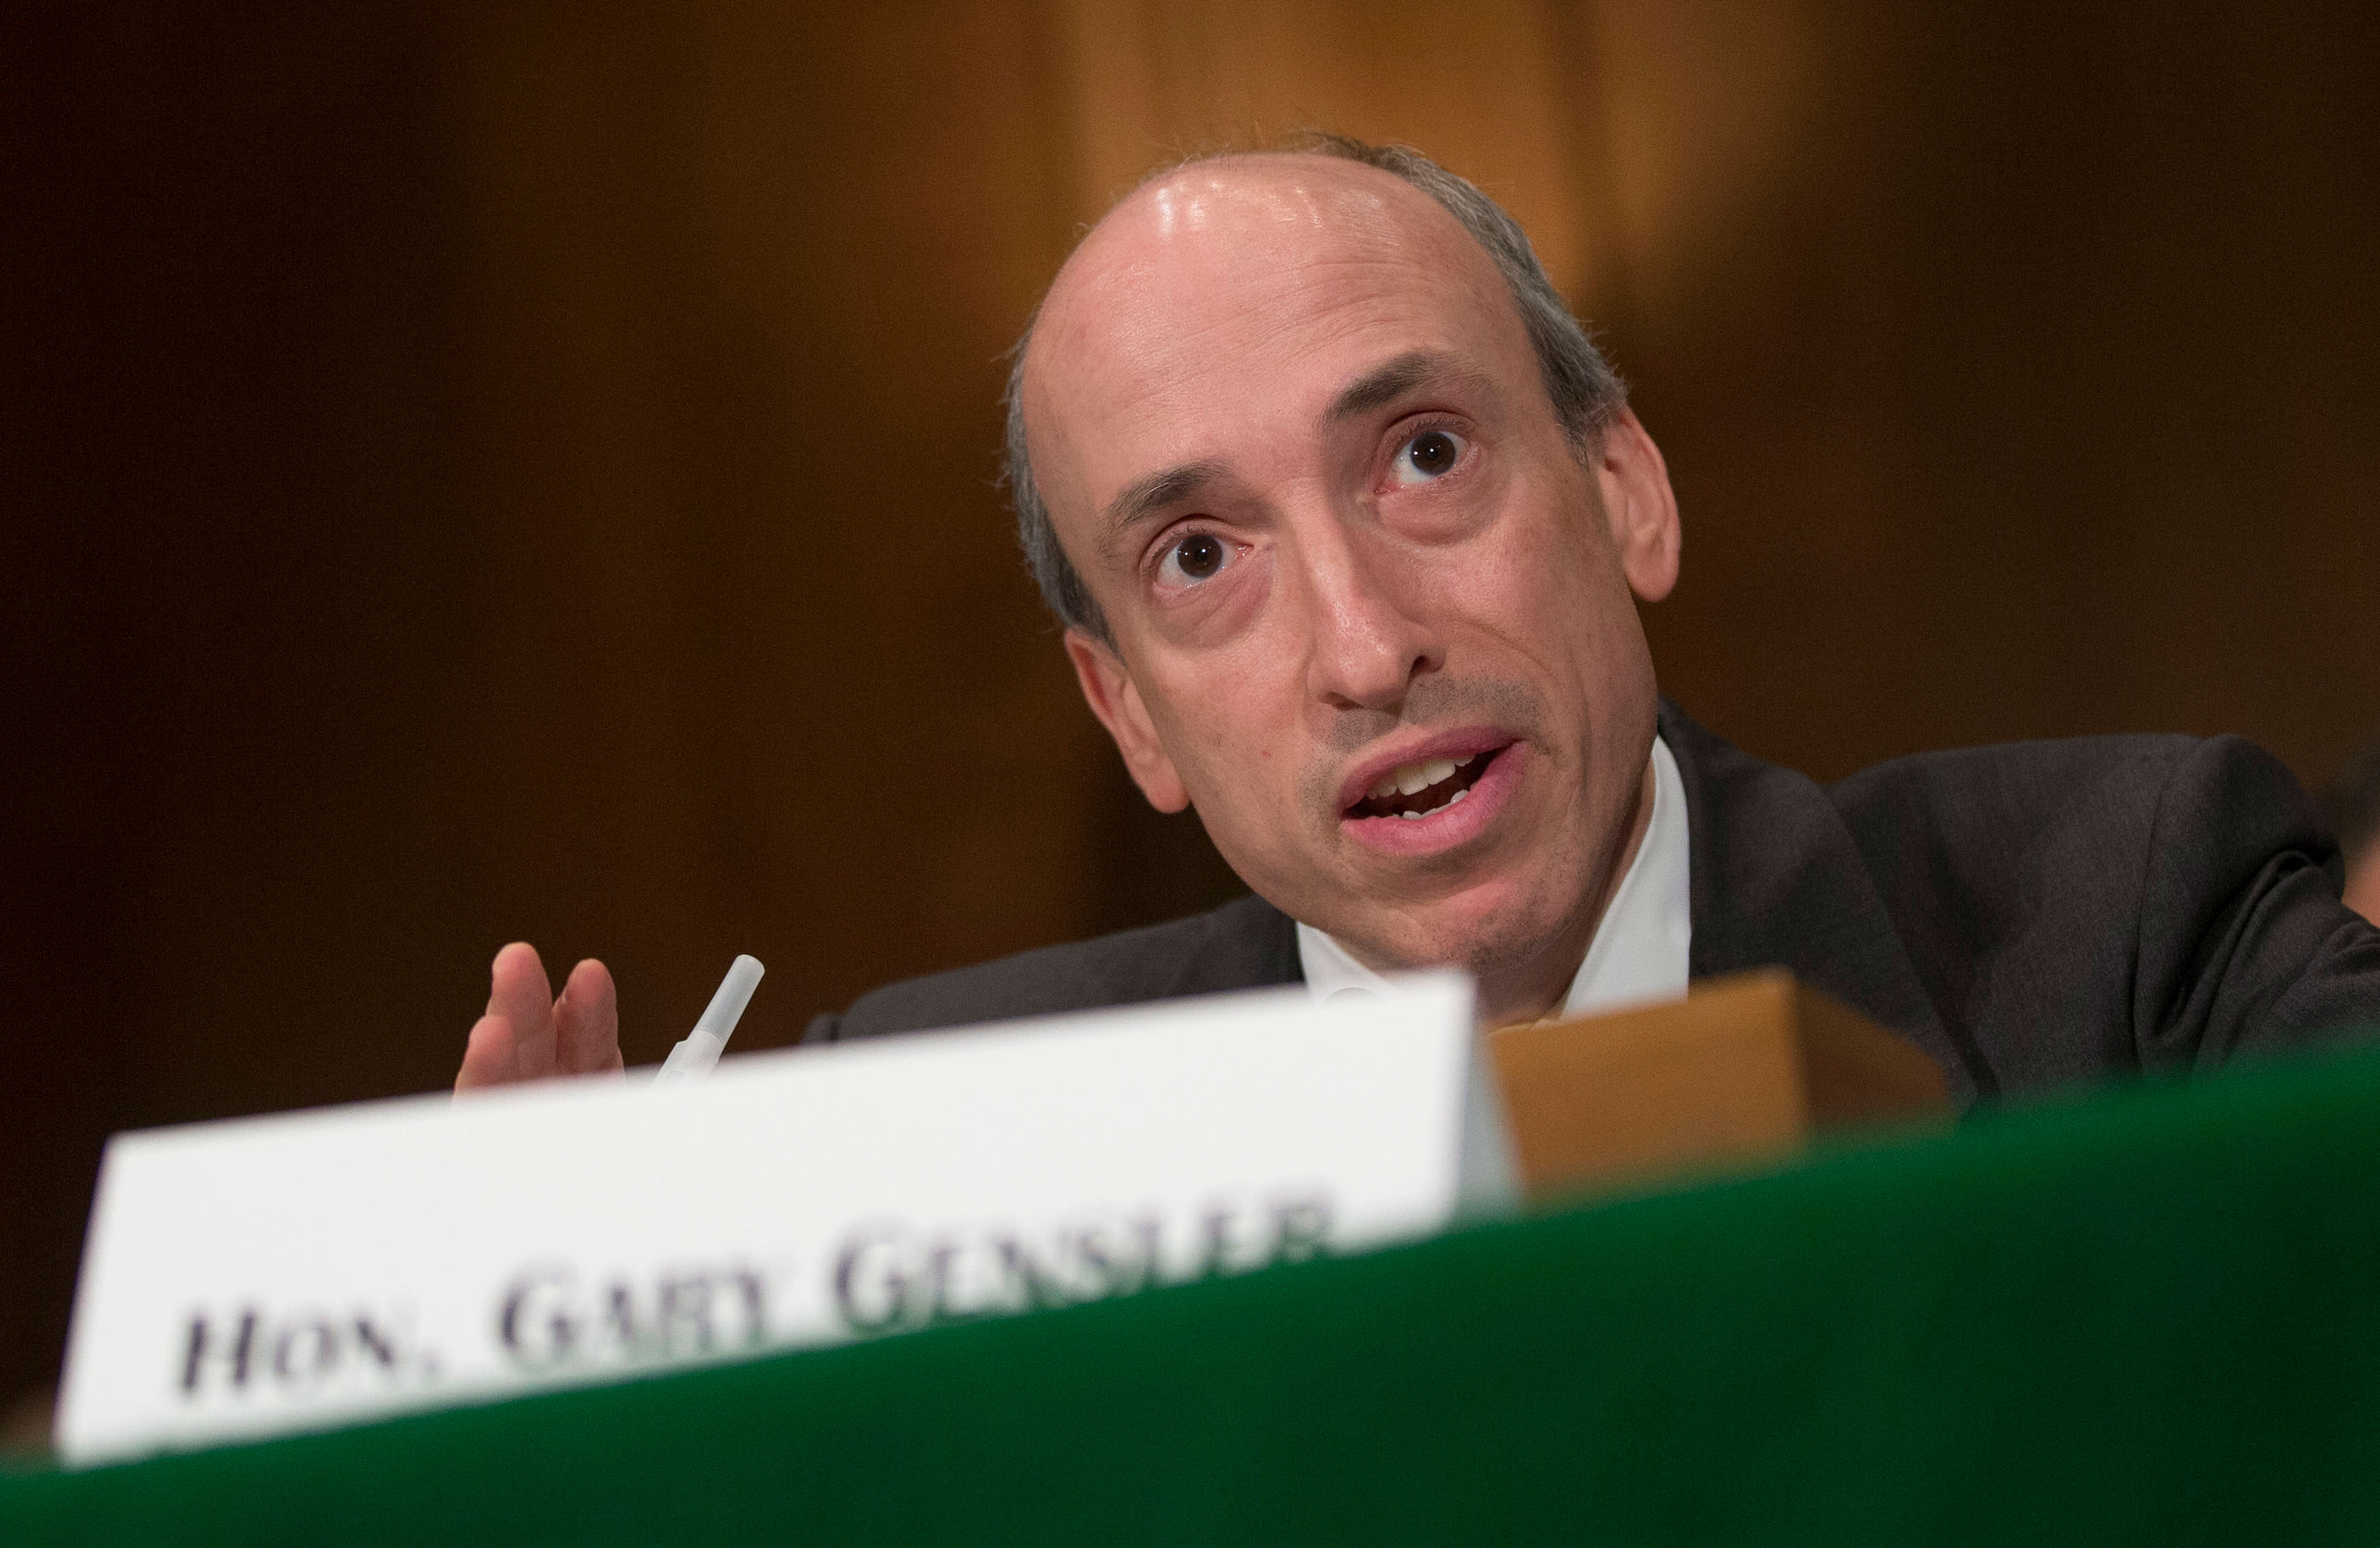 Gary Gensler confirmed by Senate to lead the SEC, Wall Street's top regulator